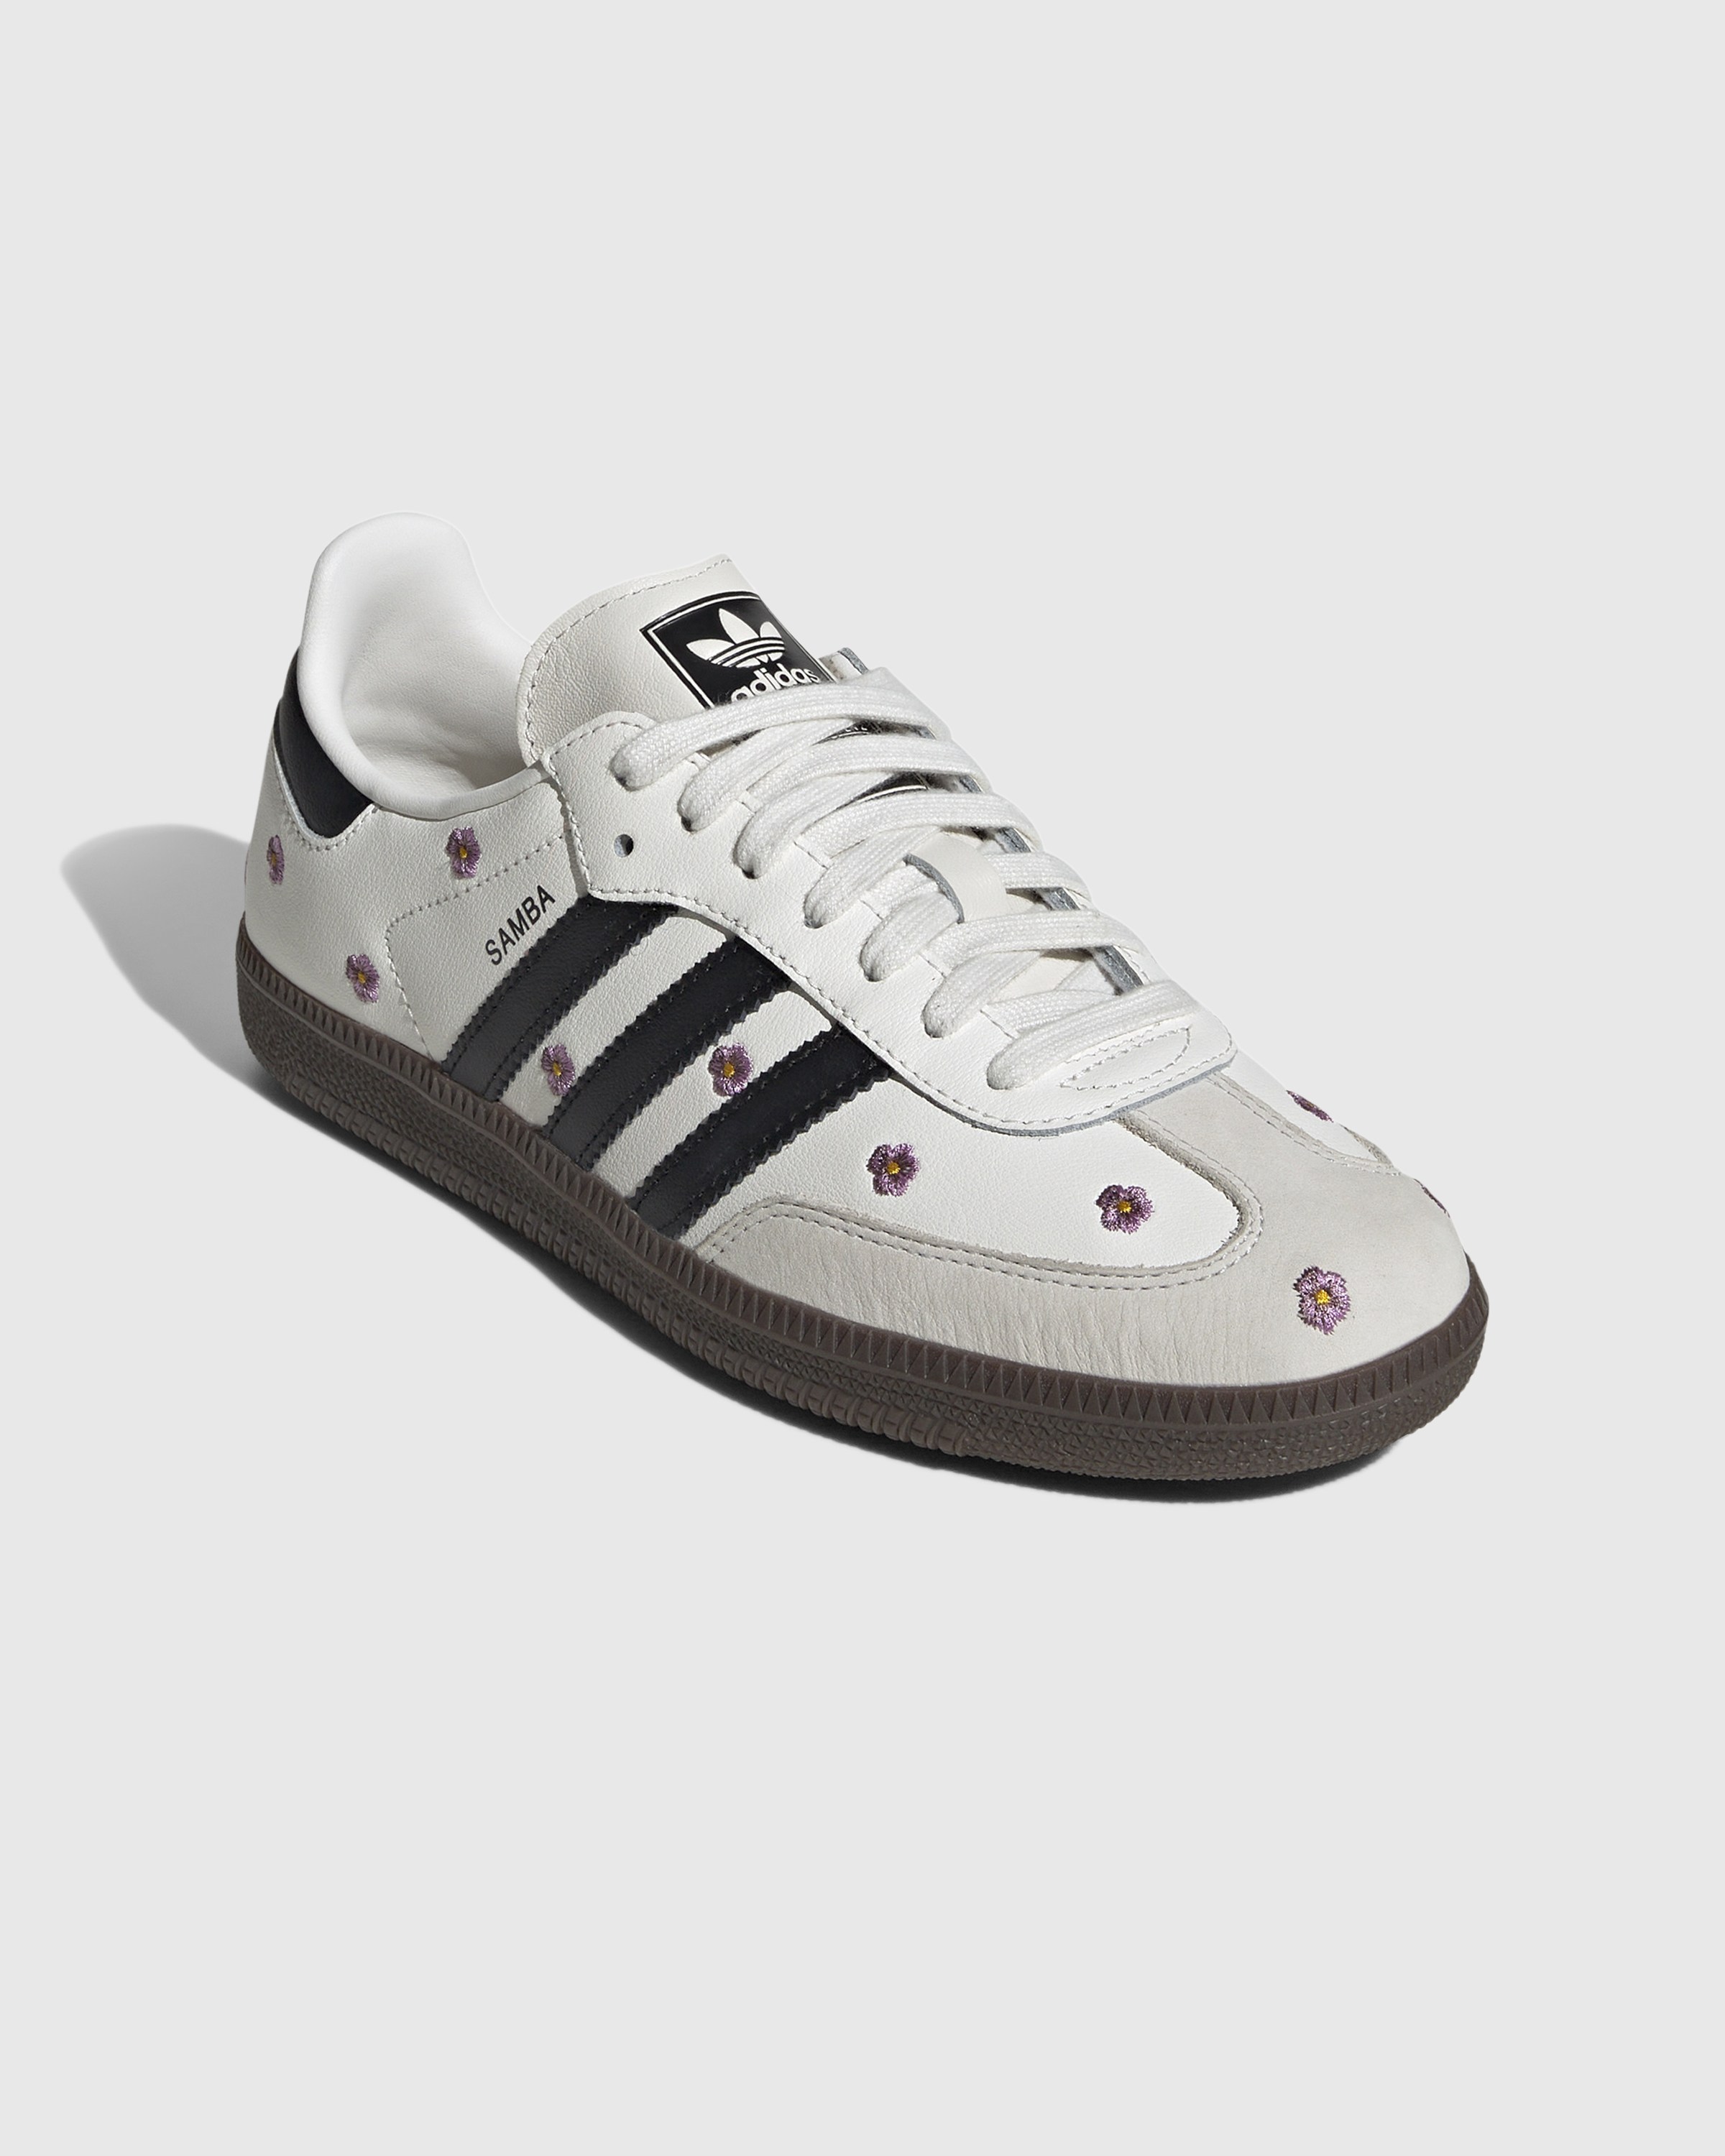 Adidas – Samba OG W White/Black/Gum - Low Top Sneakers - White - Image 3